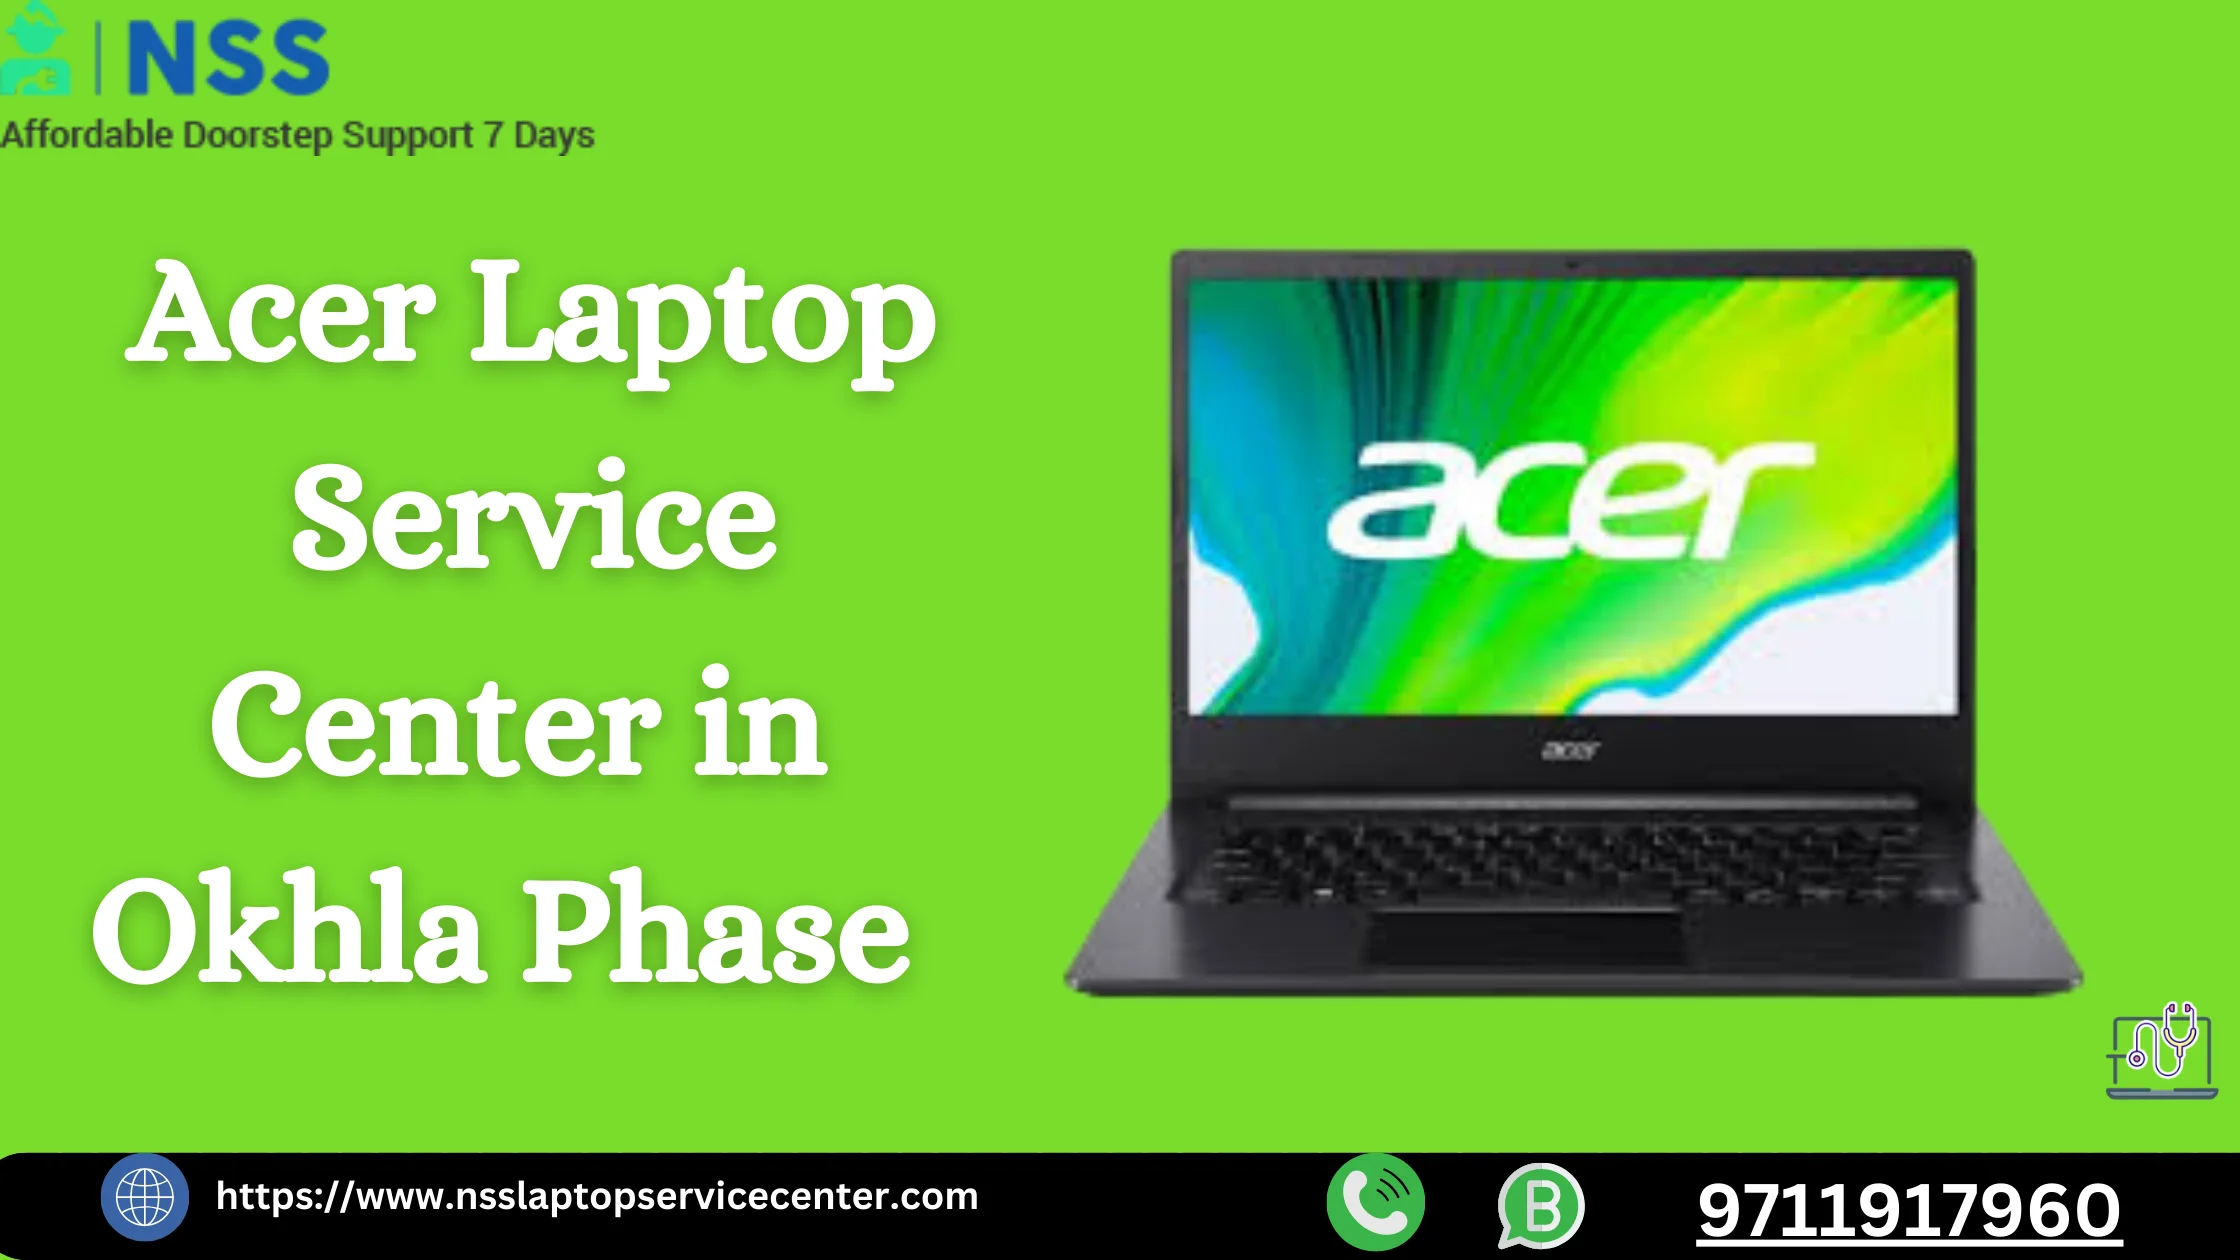 Acer Laptop Service Center in  Okhla Phase Near Delhi